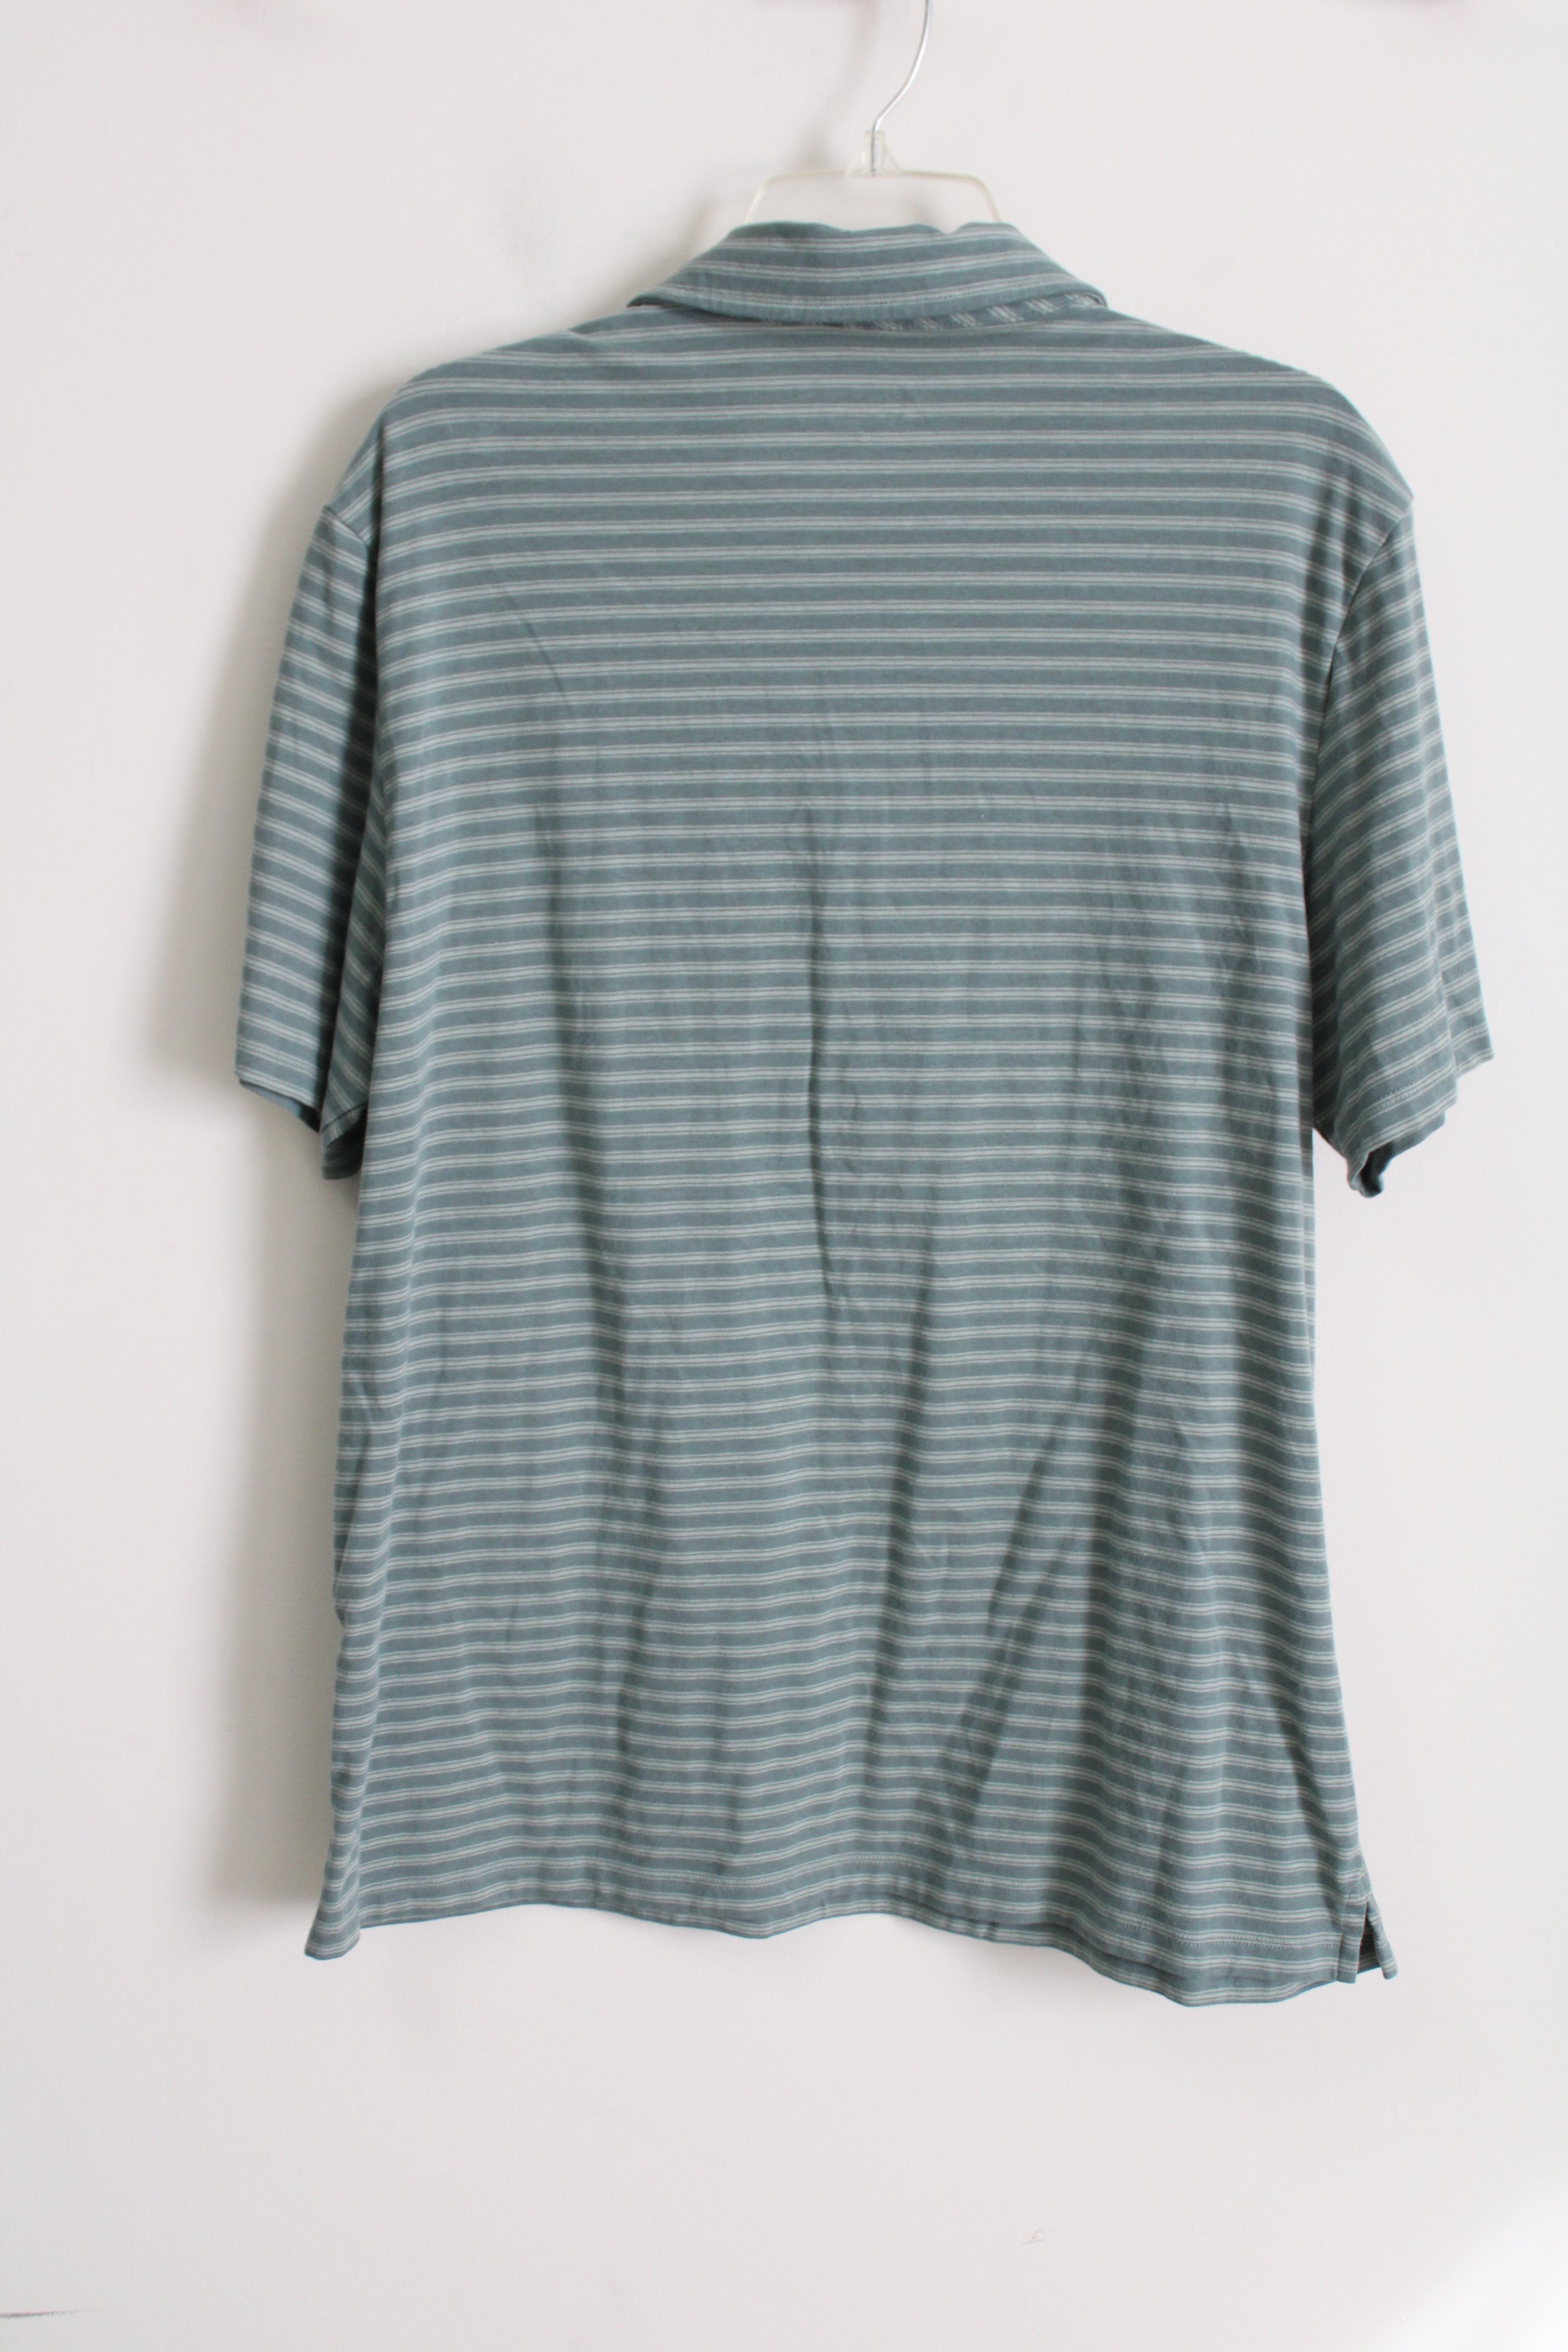 Vineyard Vines Edgartown Green Striped Polo Shirt | L